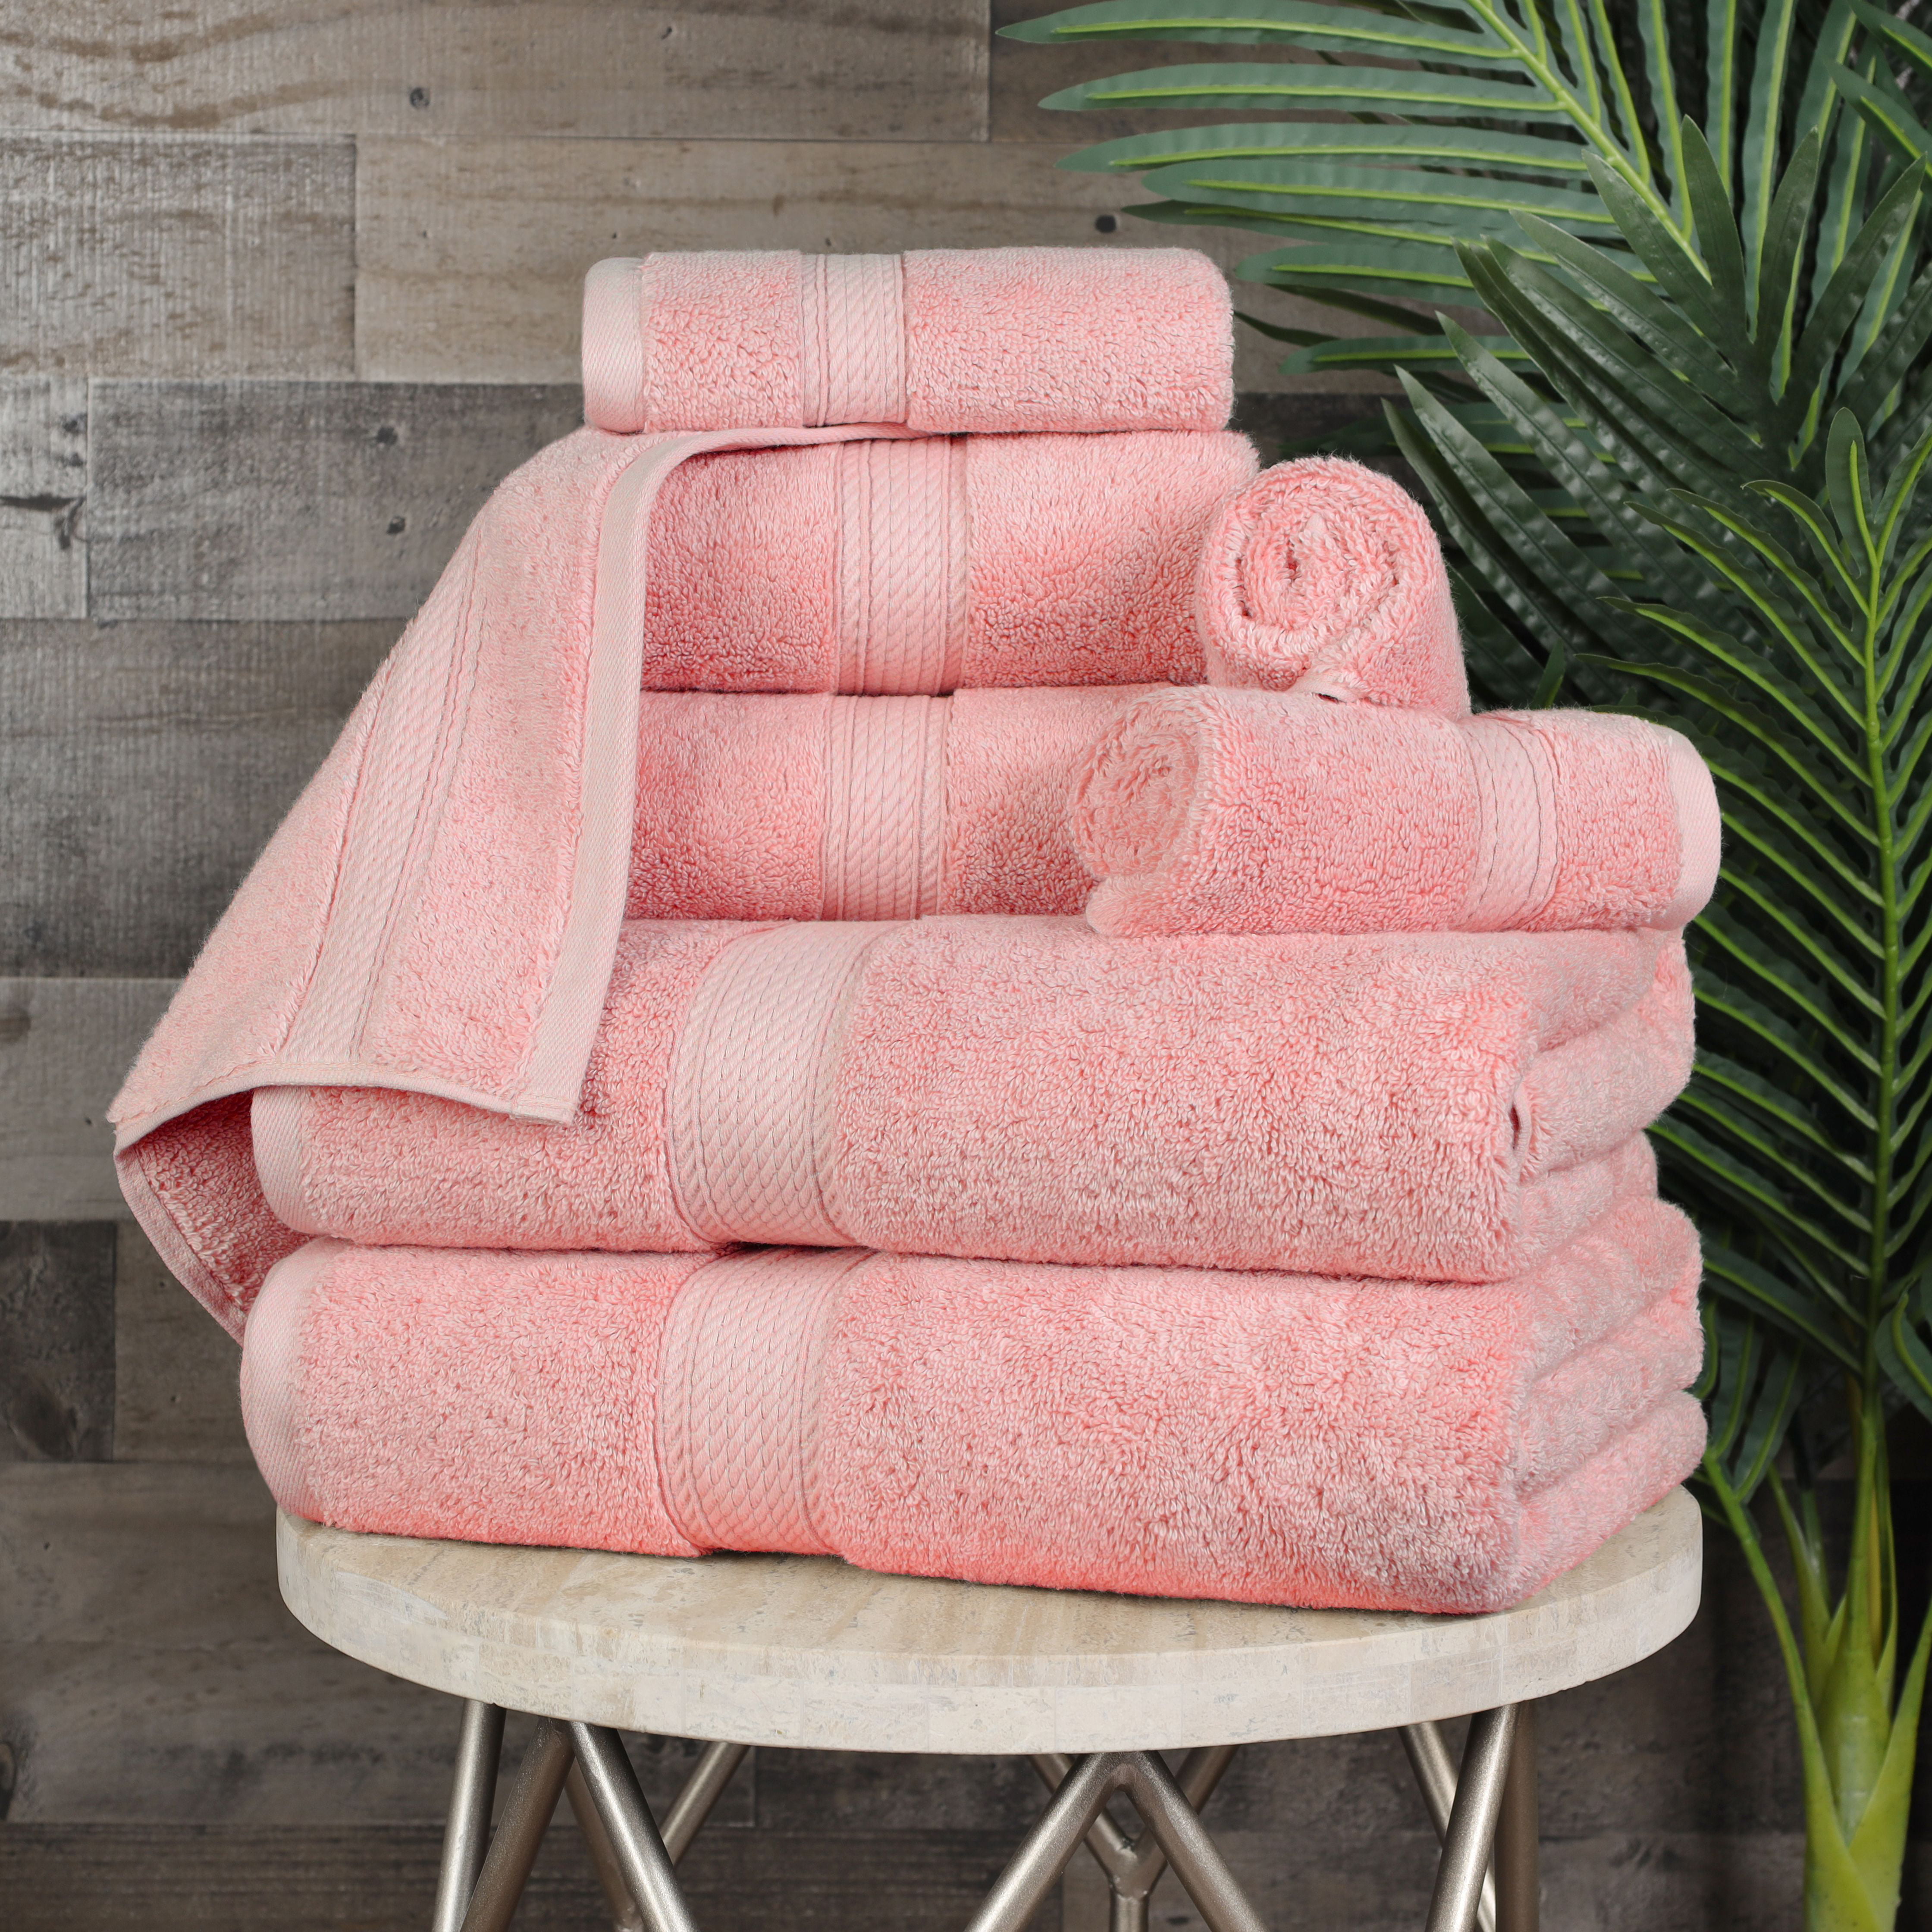 Premium Egyptian Cotton Highly Absorbent Assorted 8-Piece Plush Towel Set -  30 x 55, 20 x 30, 13 x 13 